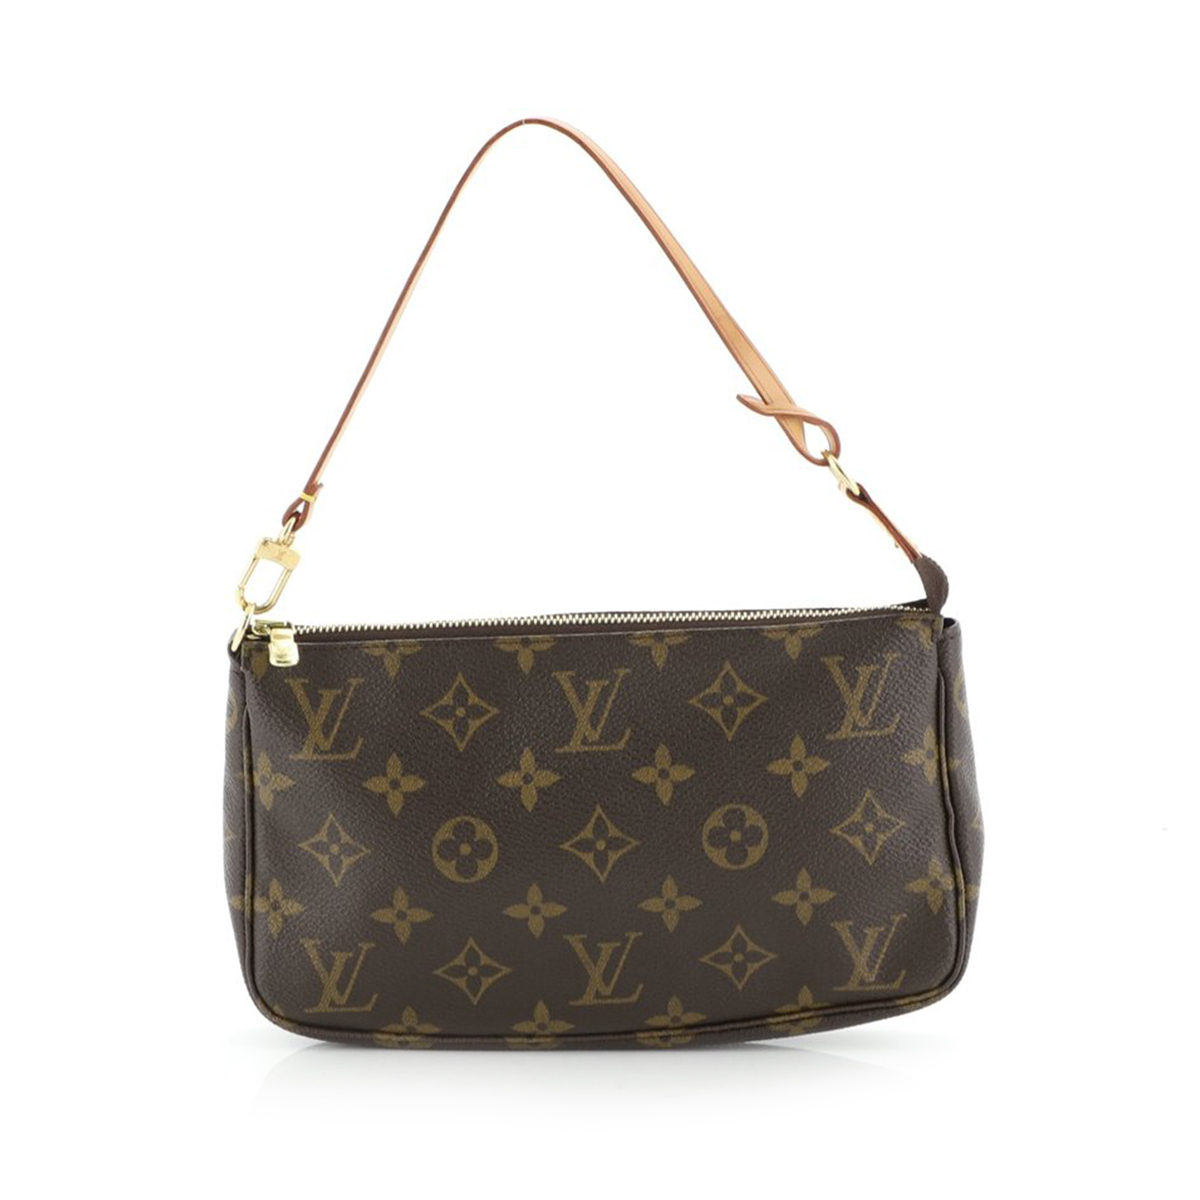 Louis Vuitton graffiti pochette accesoires bag worn by Kendall